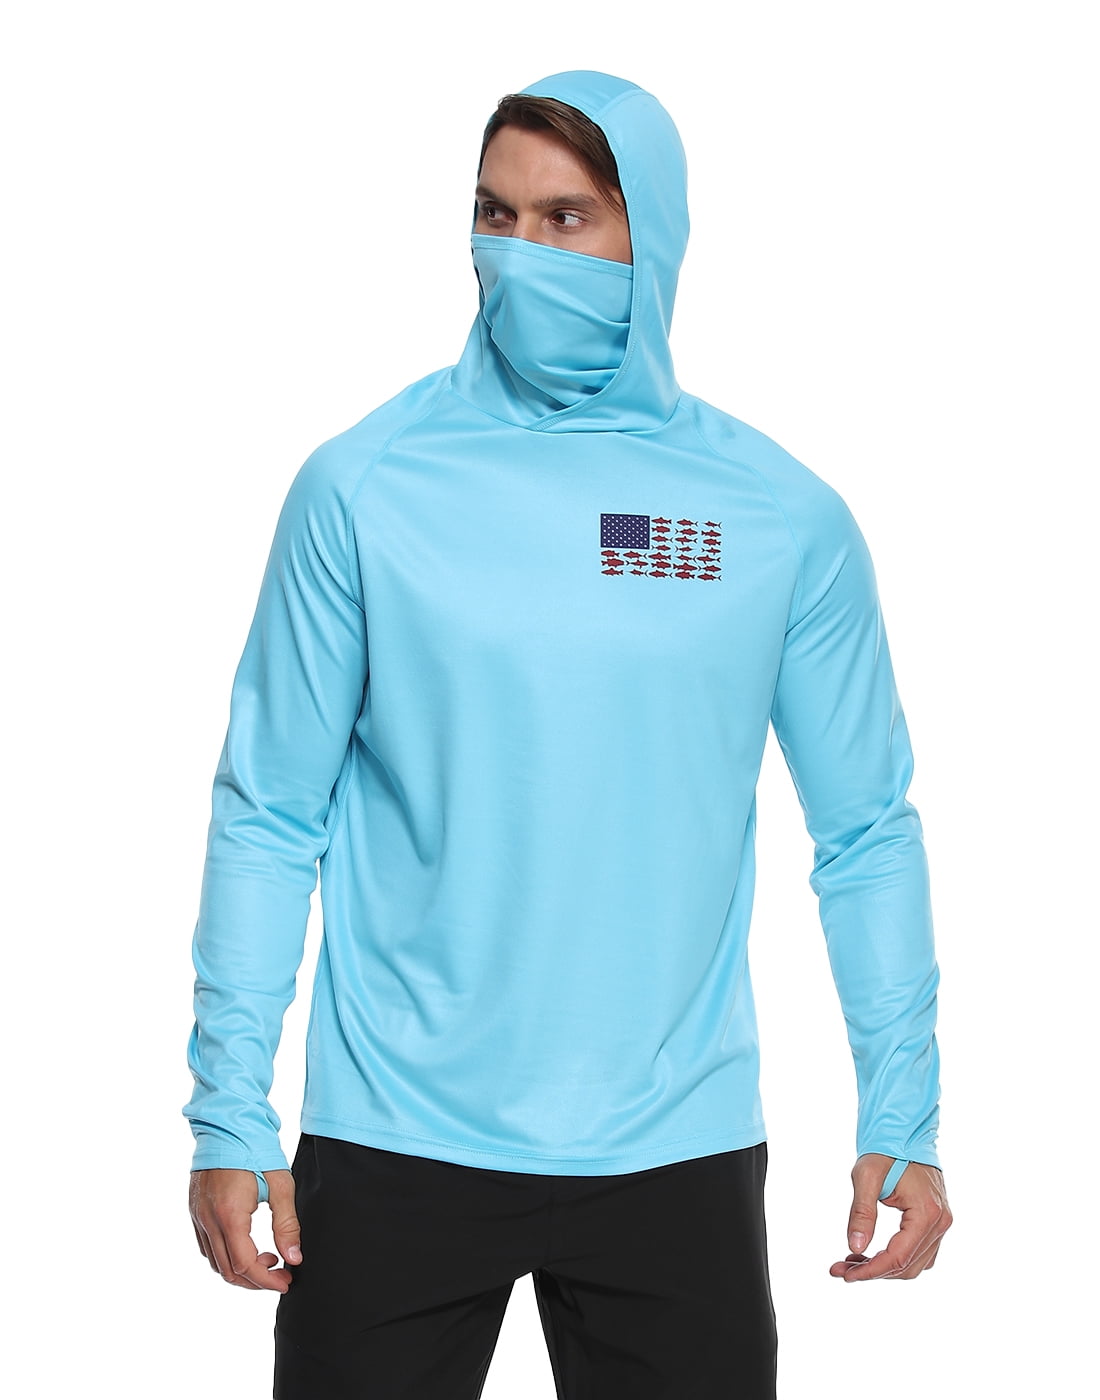 Outdoor Breathable Men Fishing Shirt Long Sleeve Fishing Hoodies Sunscreen Coat